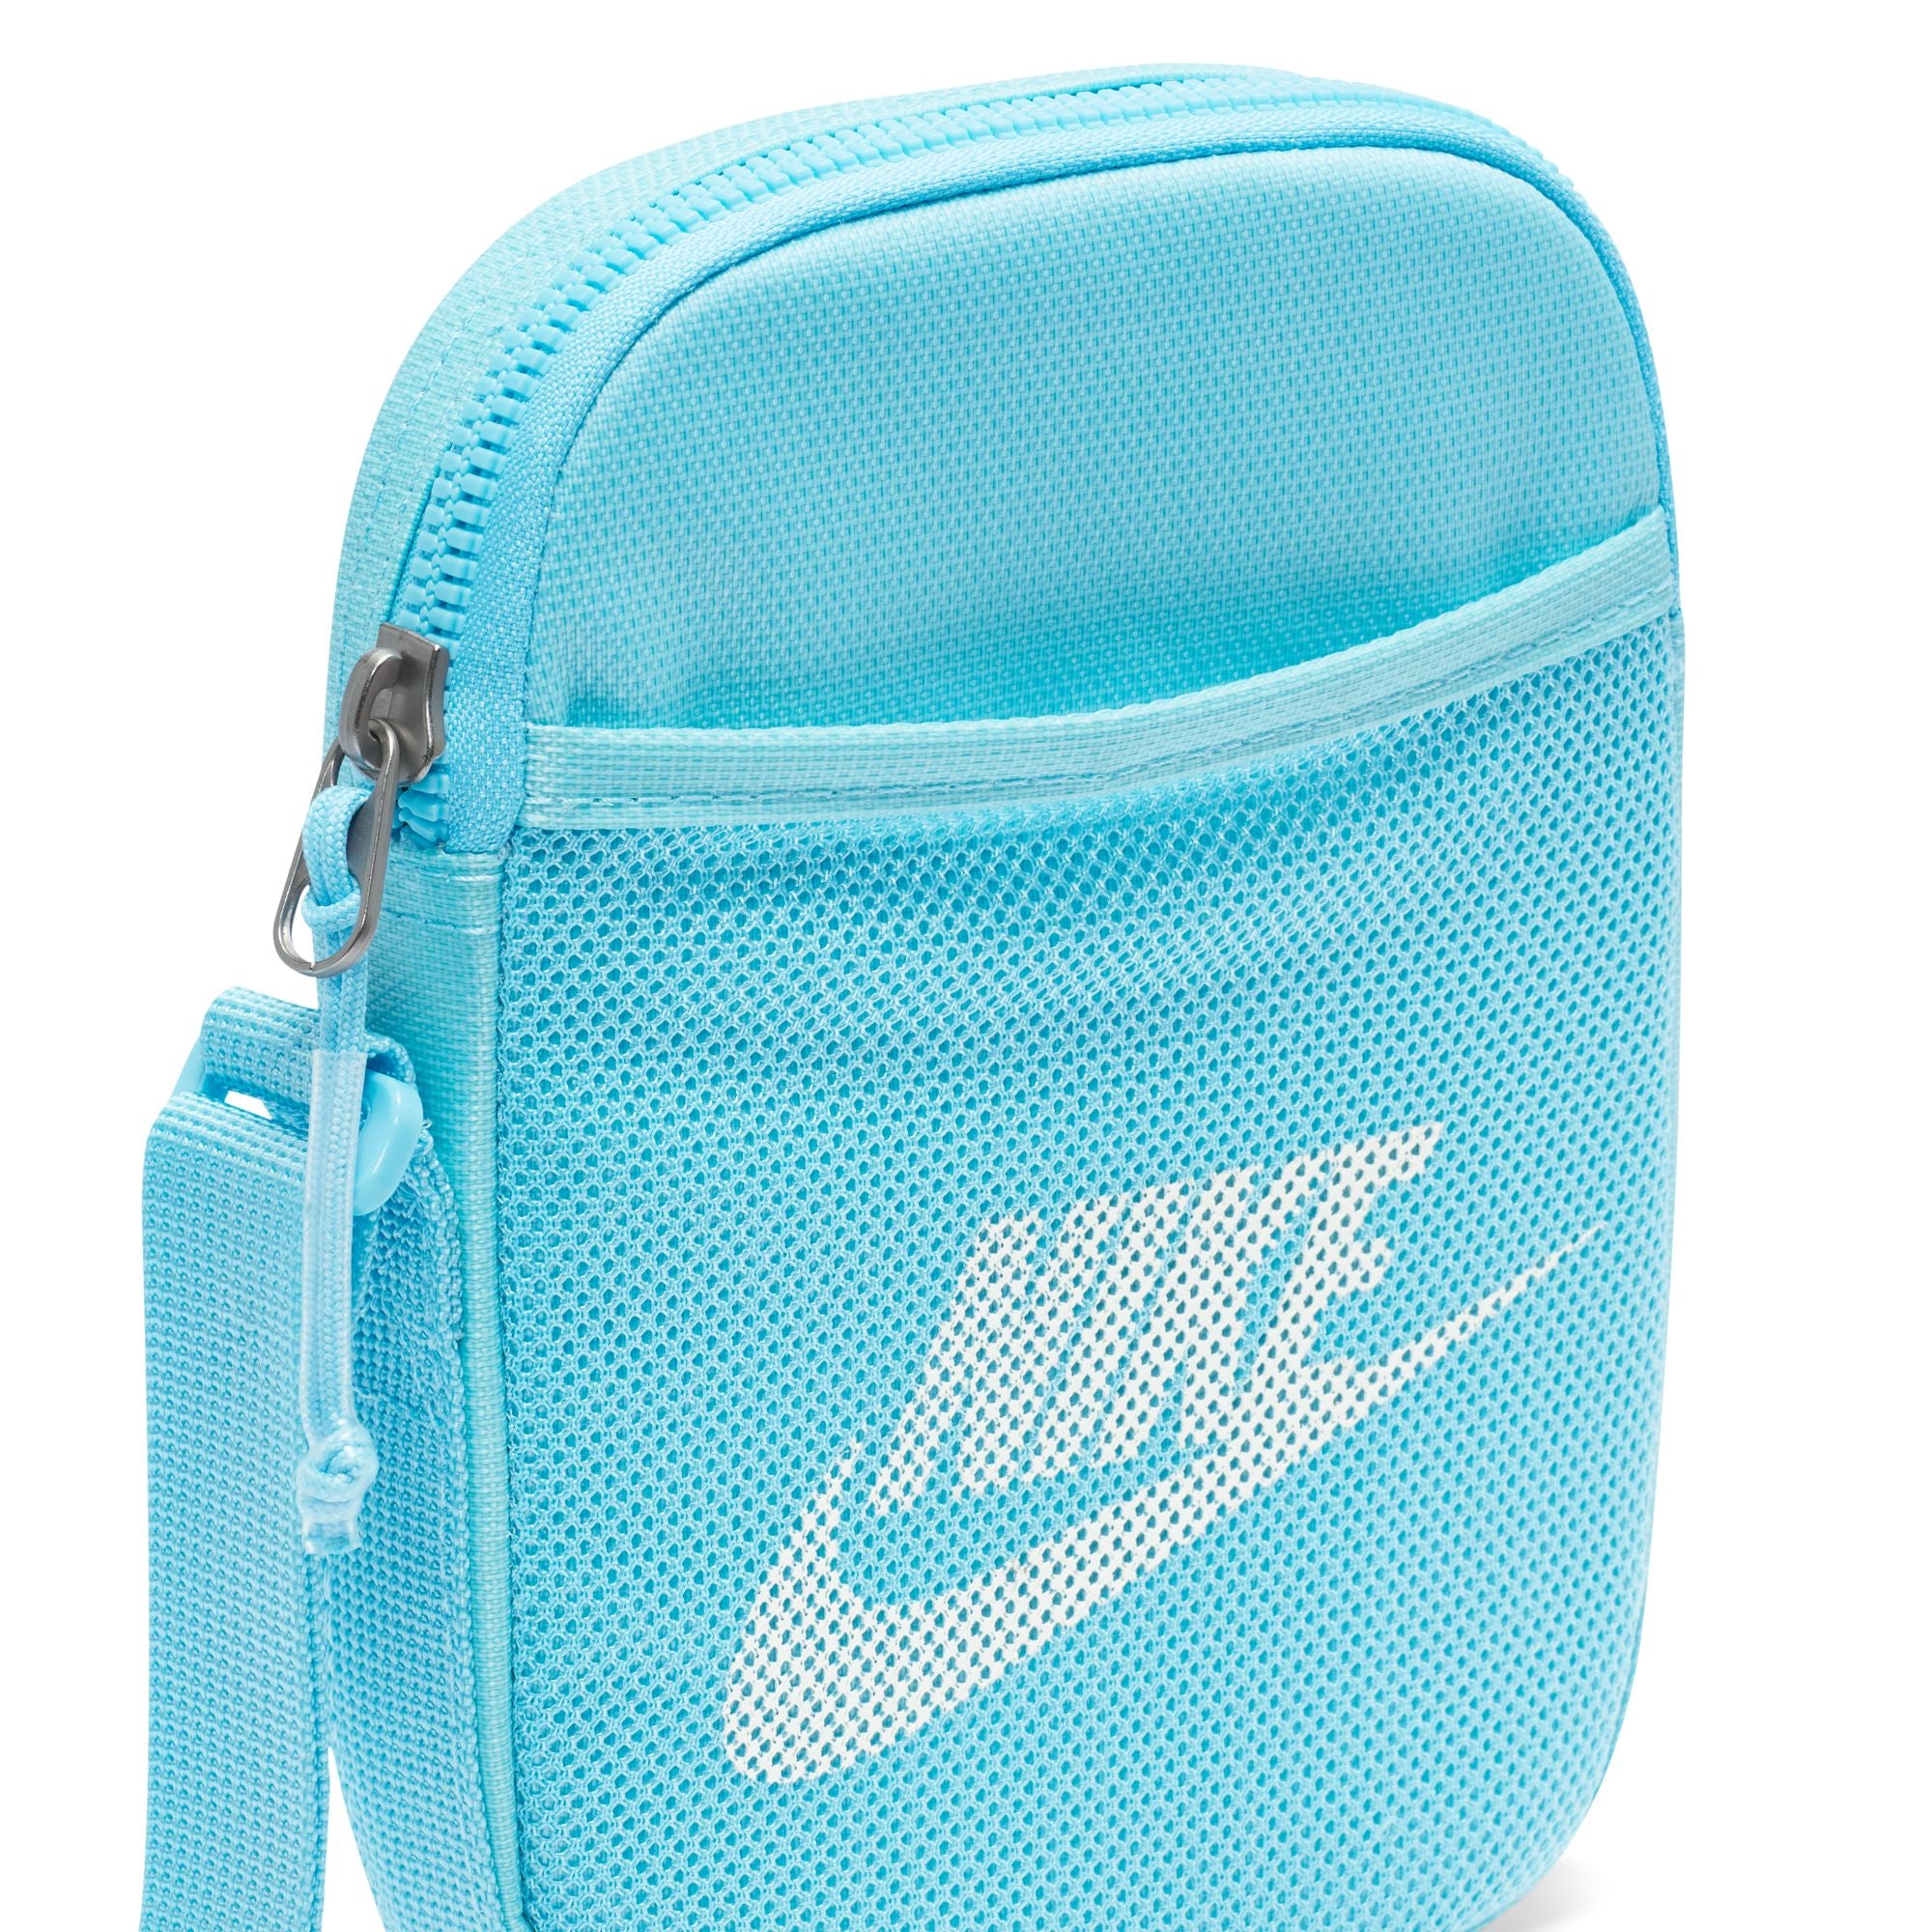 Light blue nike crossbody bag with mesh front pocket and white nike swoosh logo. Free uk shipping over £50